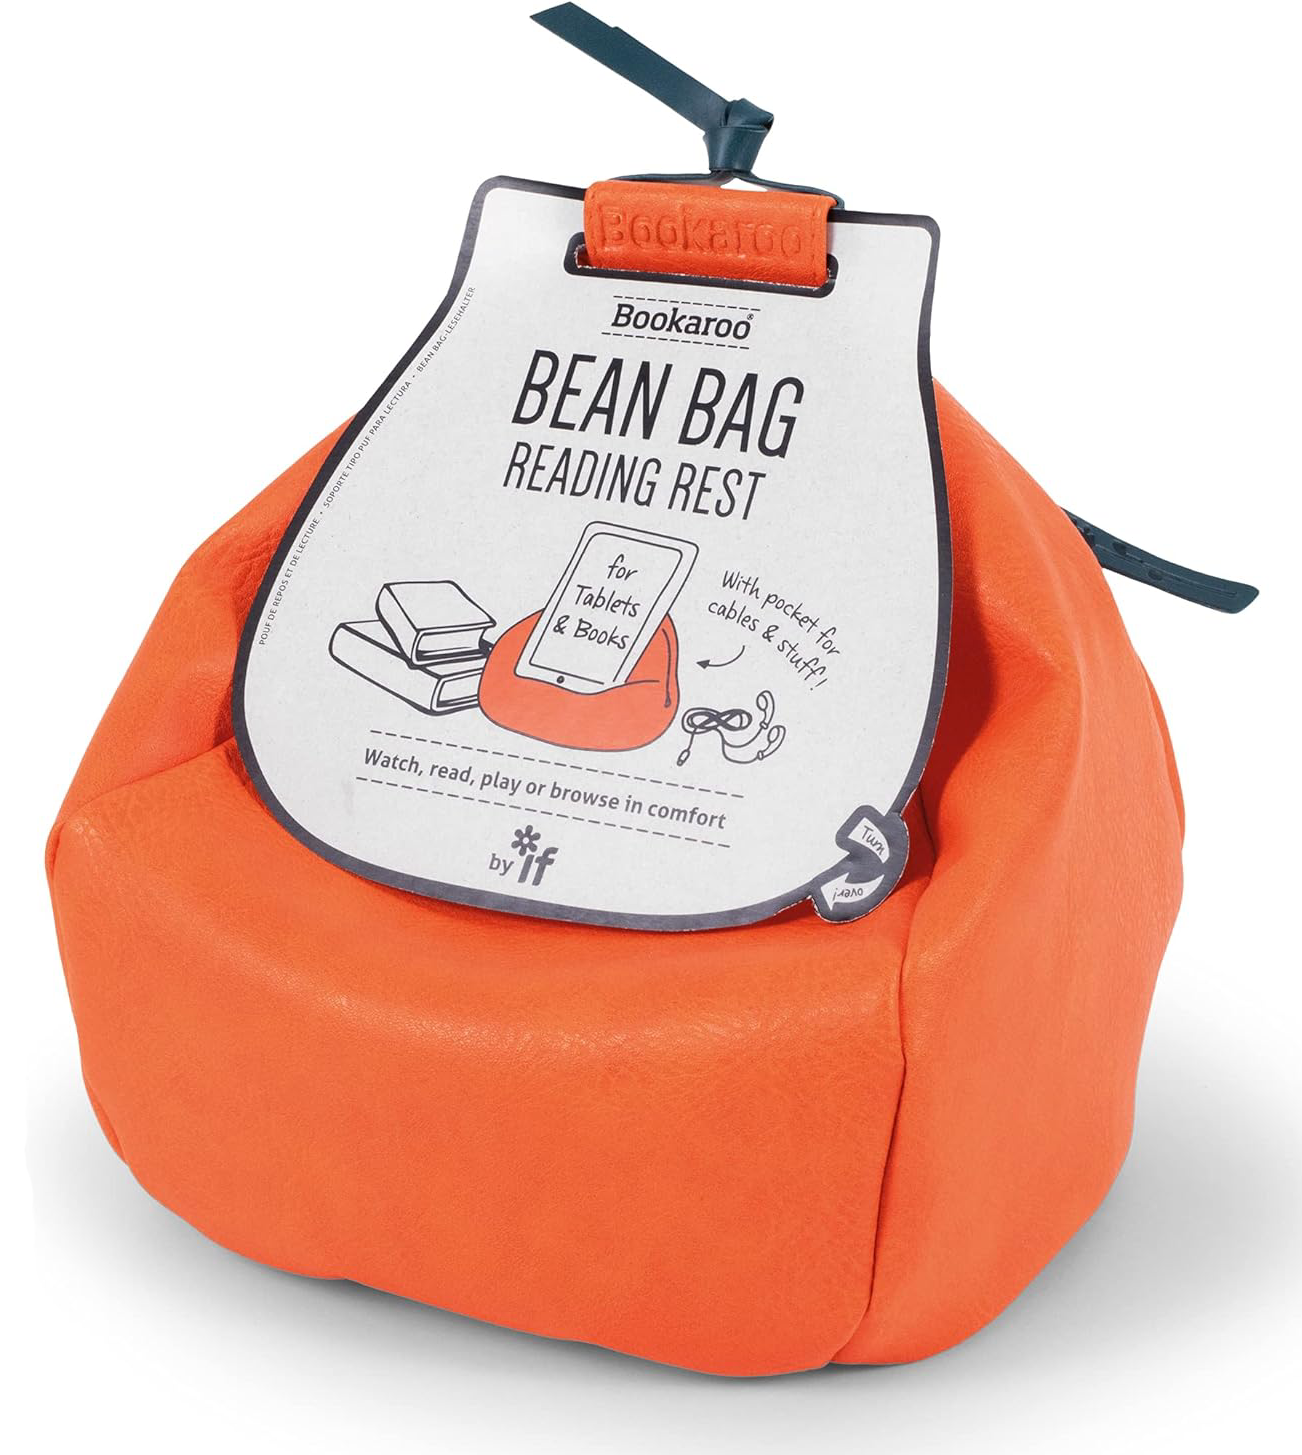 Suport pentru carte - Bookaroo Bean Bag Reading Rest - Orange | If (That Company Called)